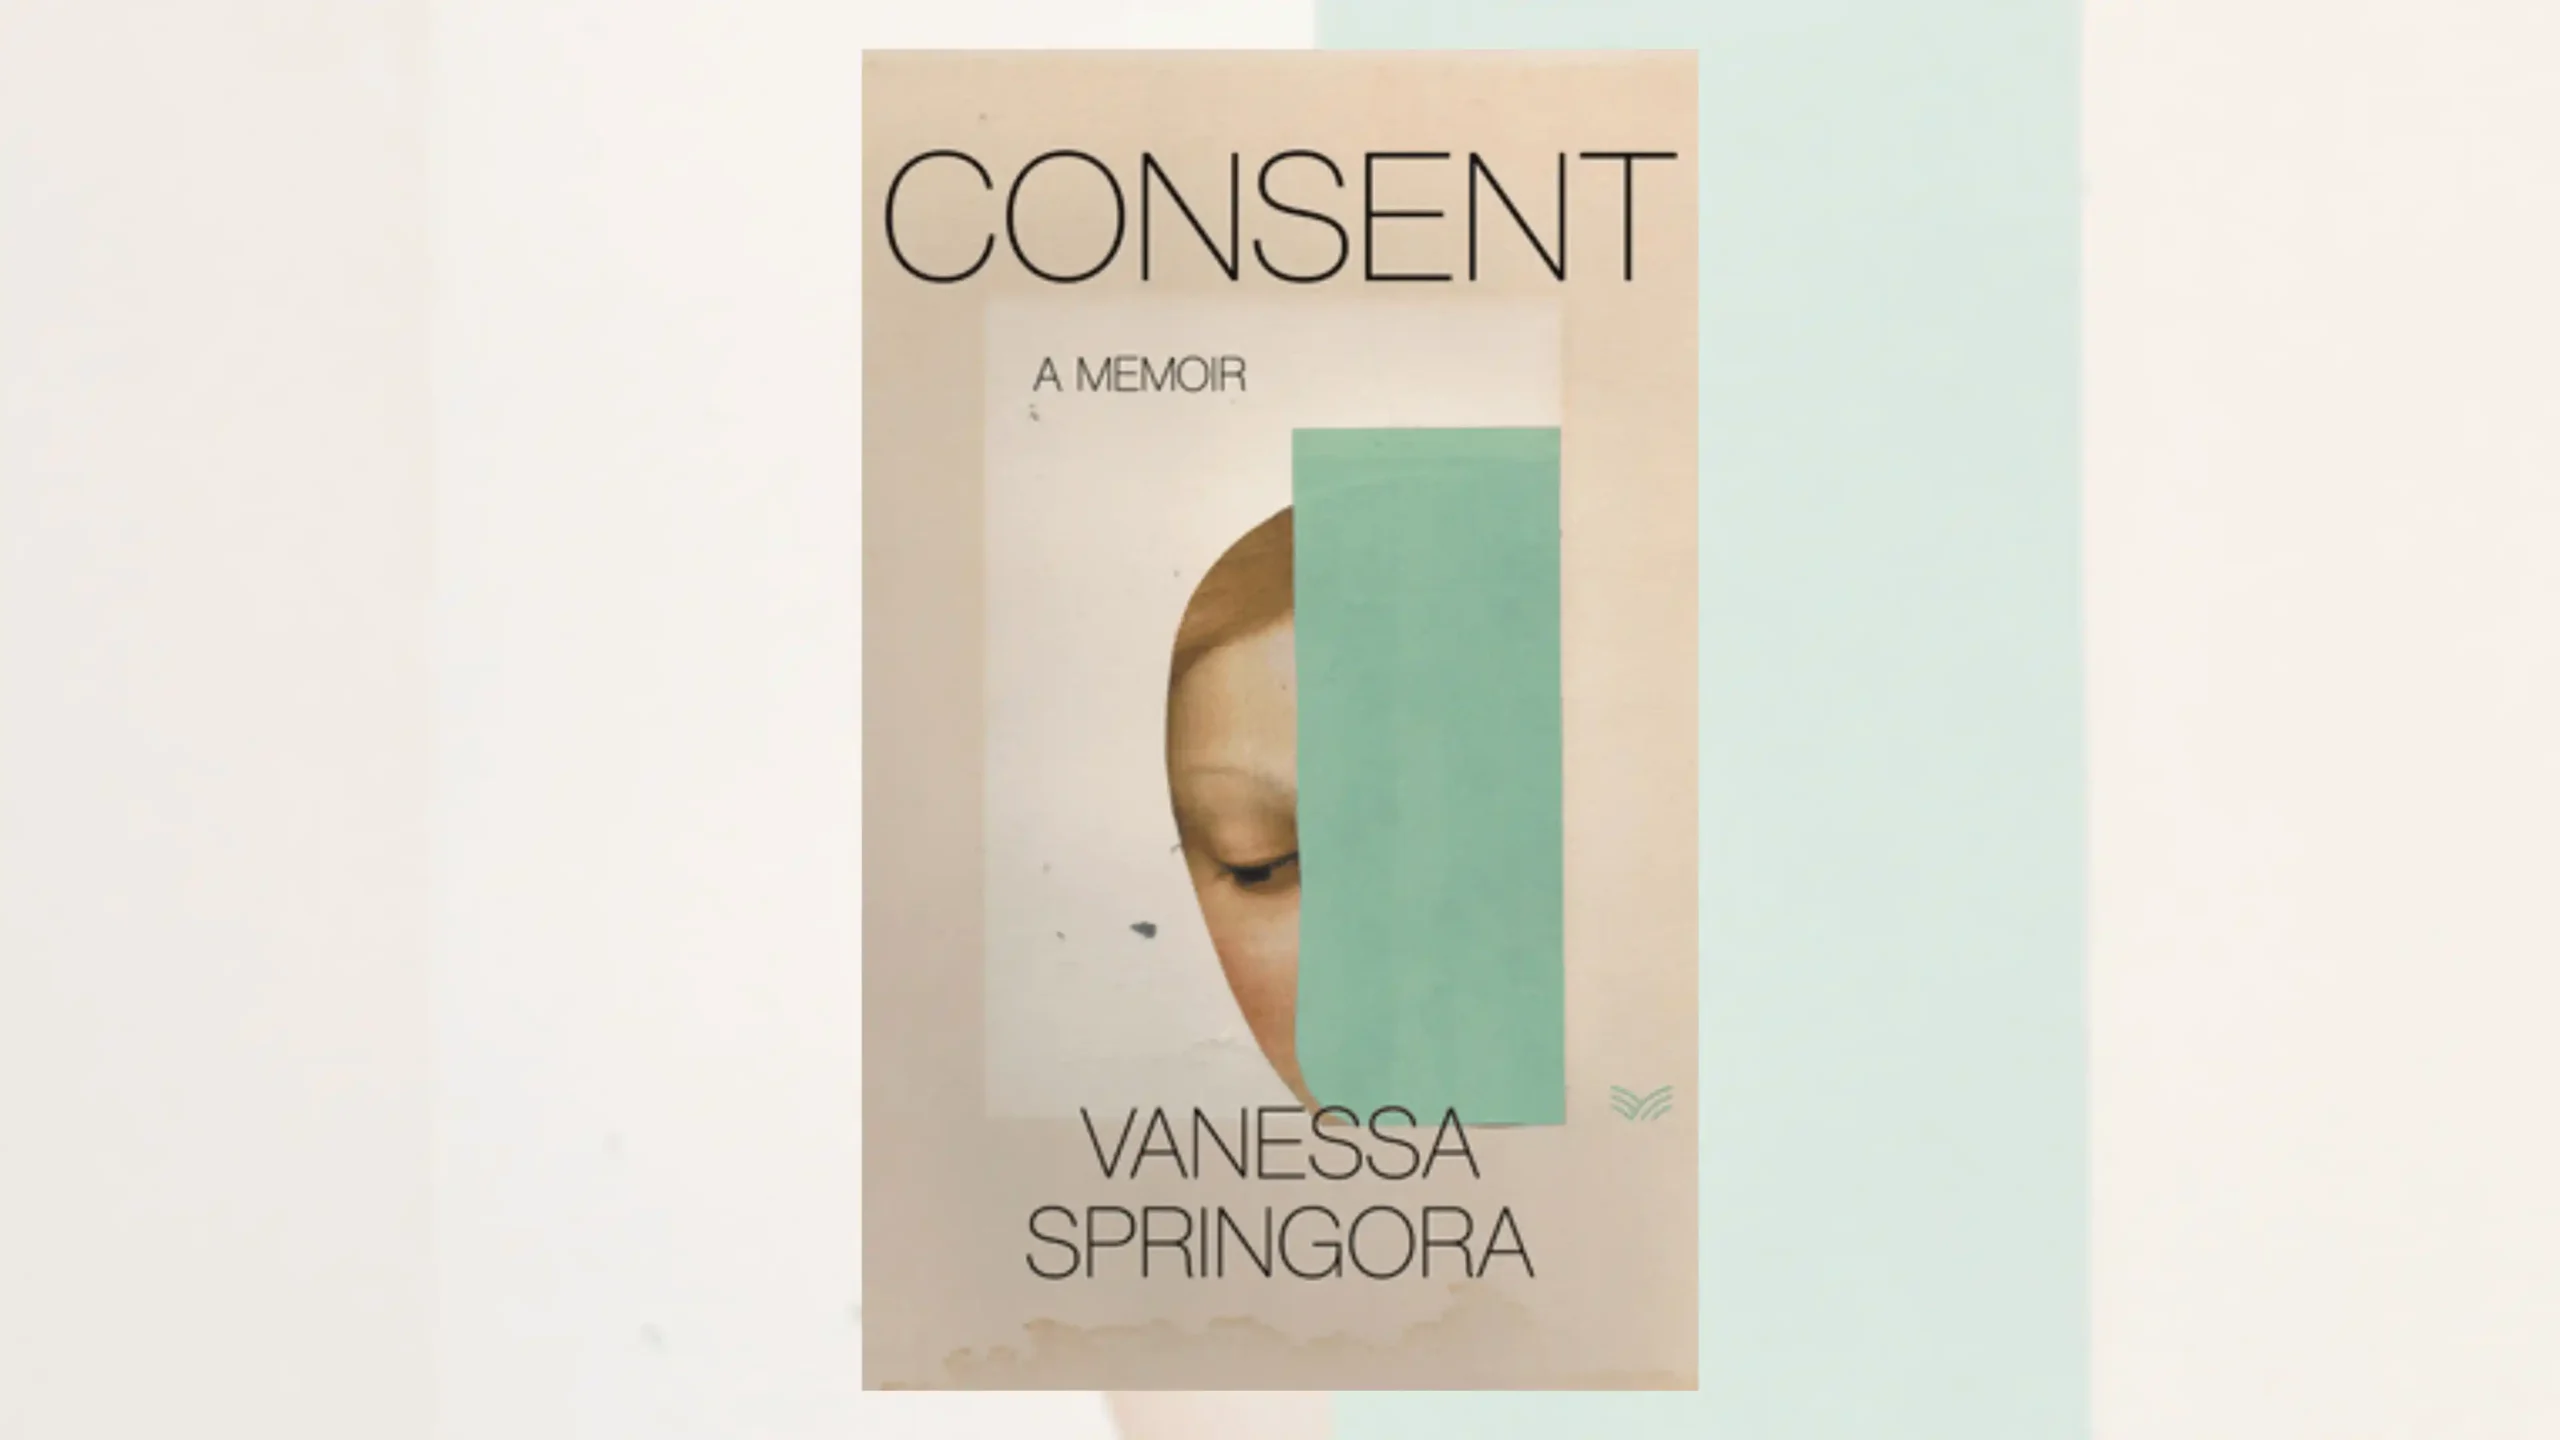 Consent by Vanessa springora scaled